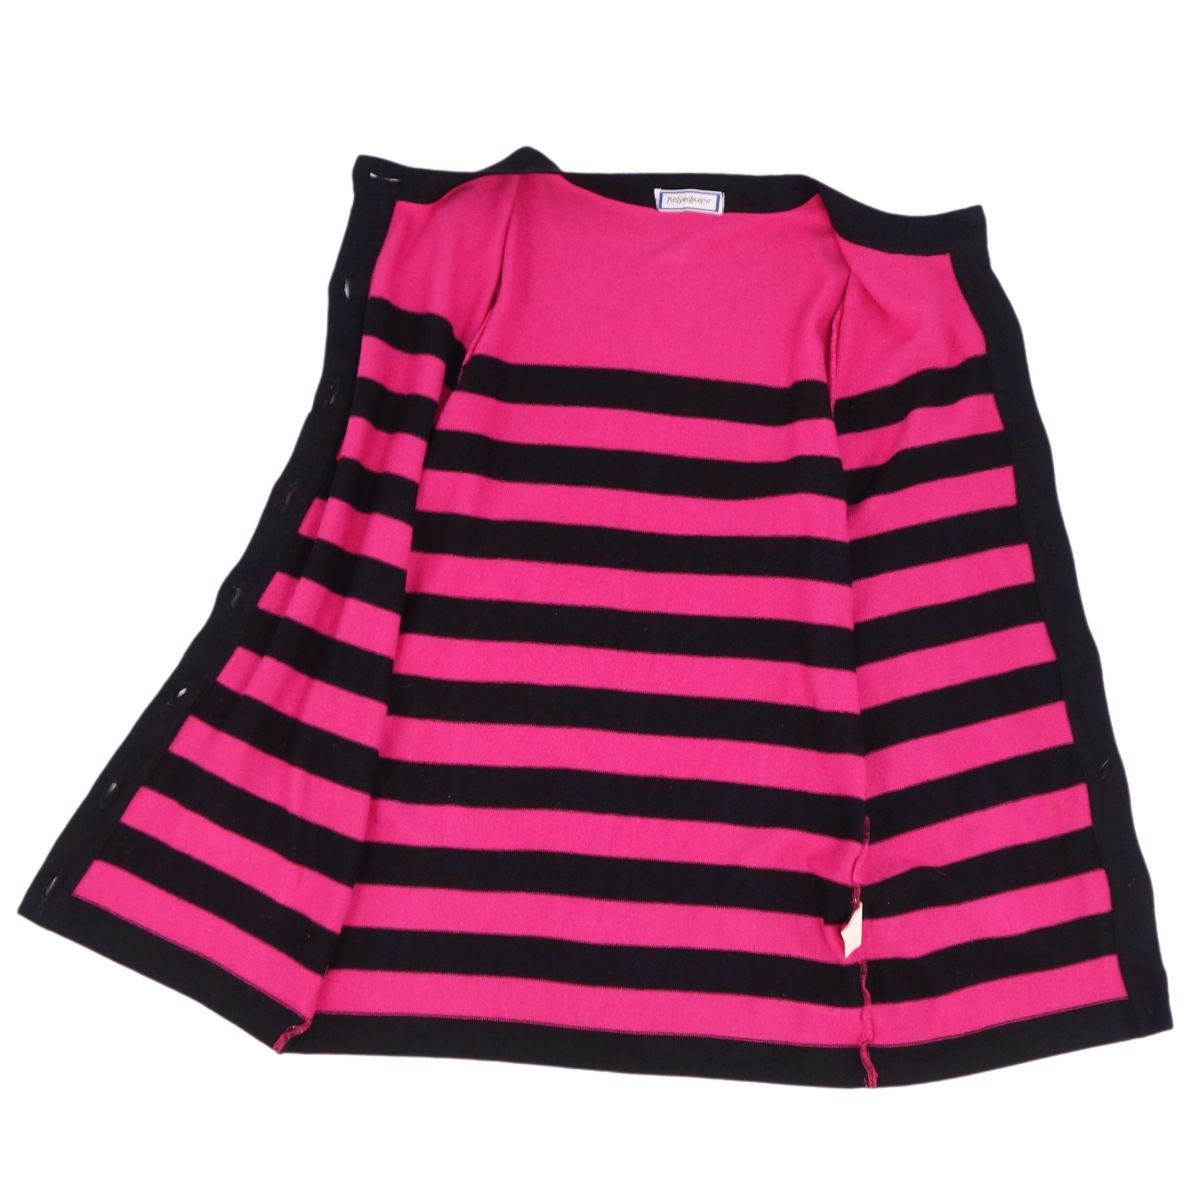 Vint Ivan Laurent Yves Saint Laurent s Cardigan Long Sleeve Boundary Tops  M Equivalent  Pink/Black  Nitted